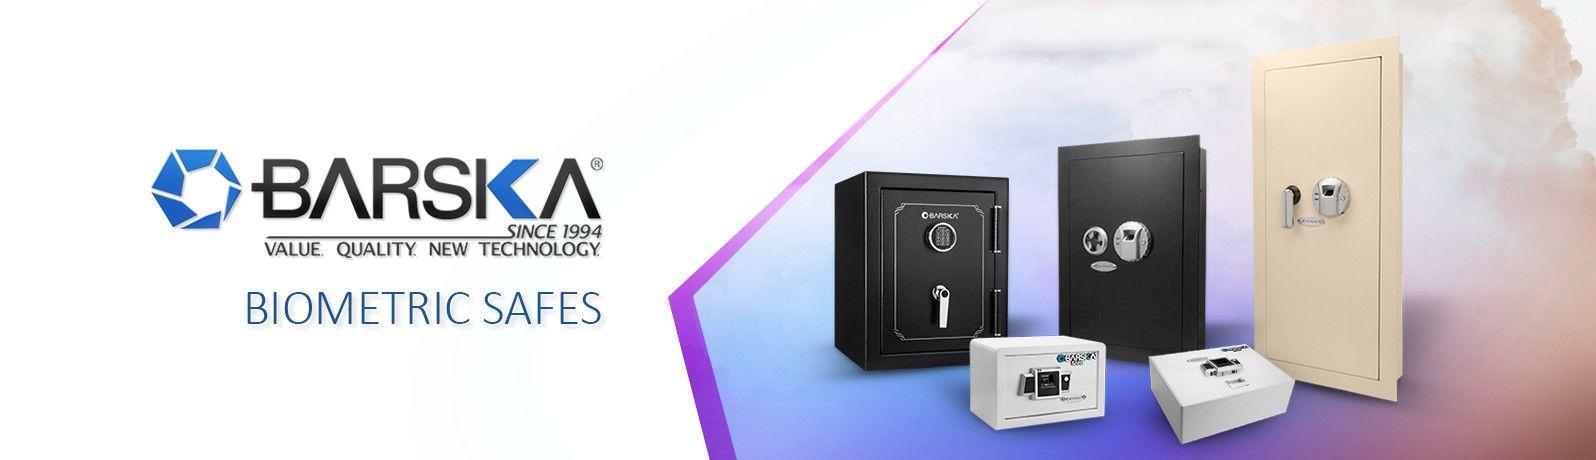 Barska Logo - Barska Biometric Safes on Sale - MegaDepot